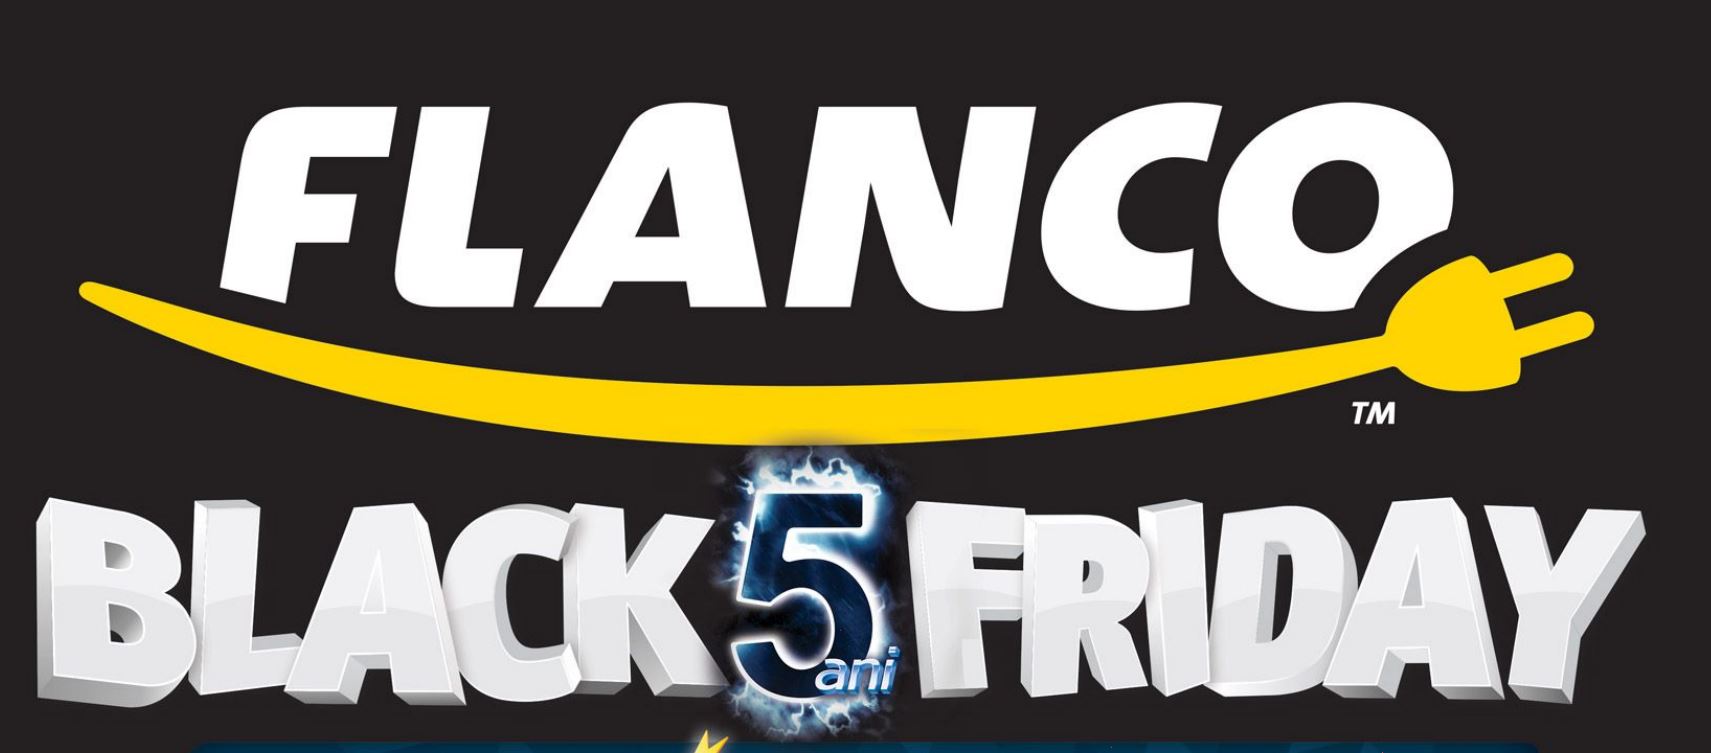 Flanco Black Friday 2015 kortingscatalogus